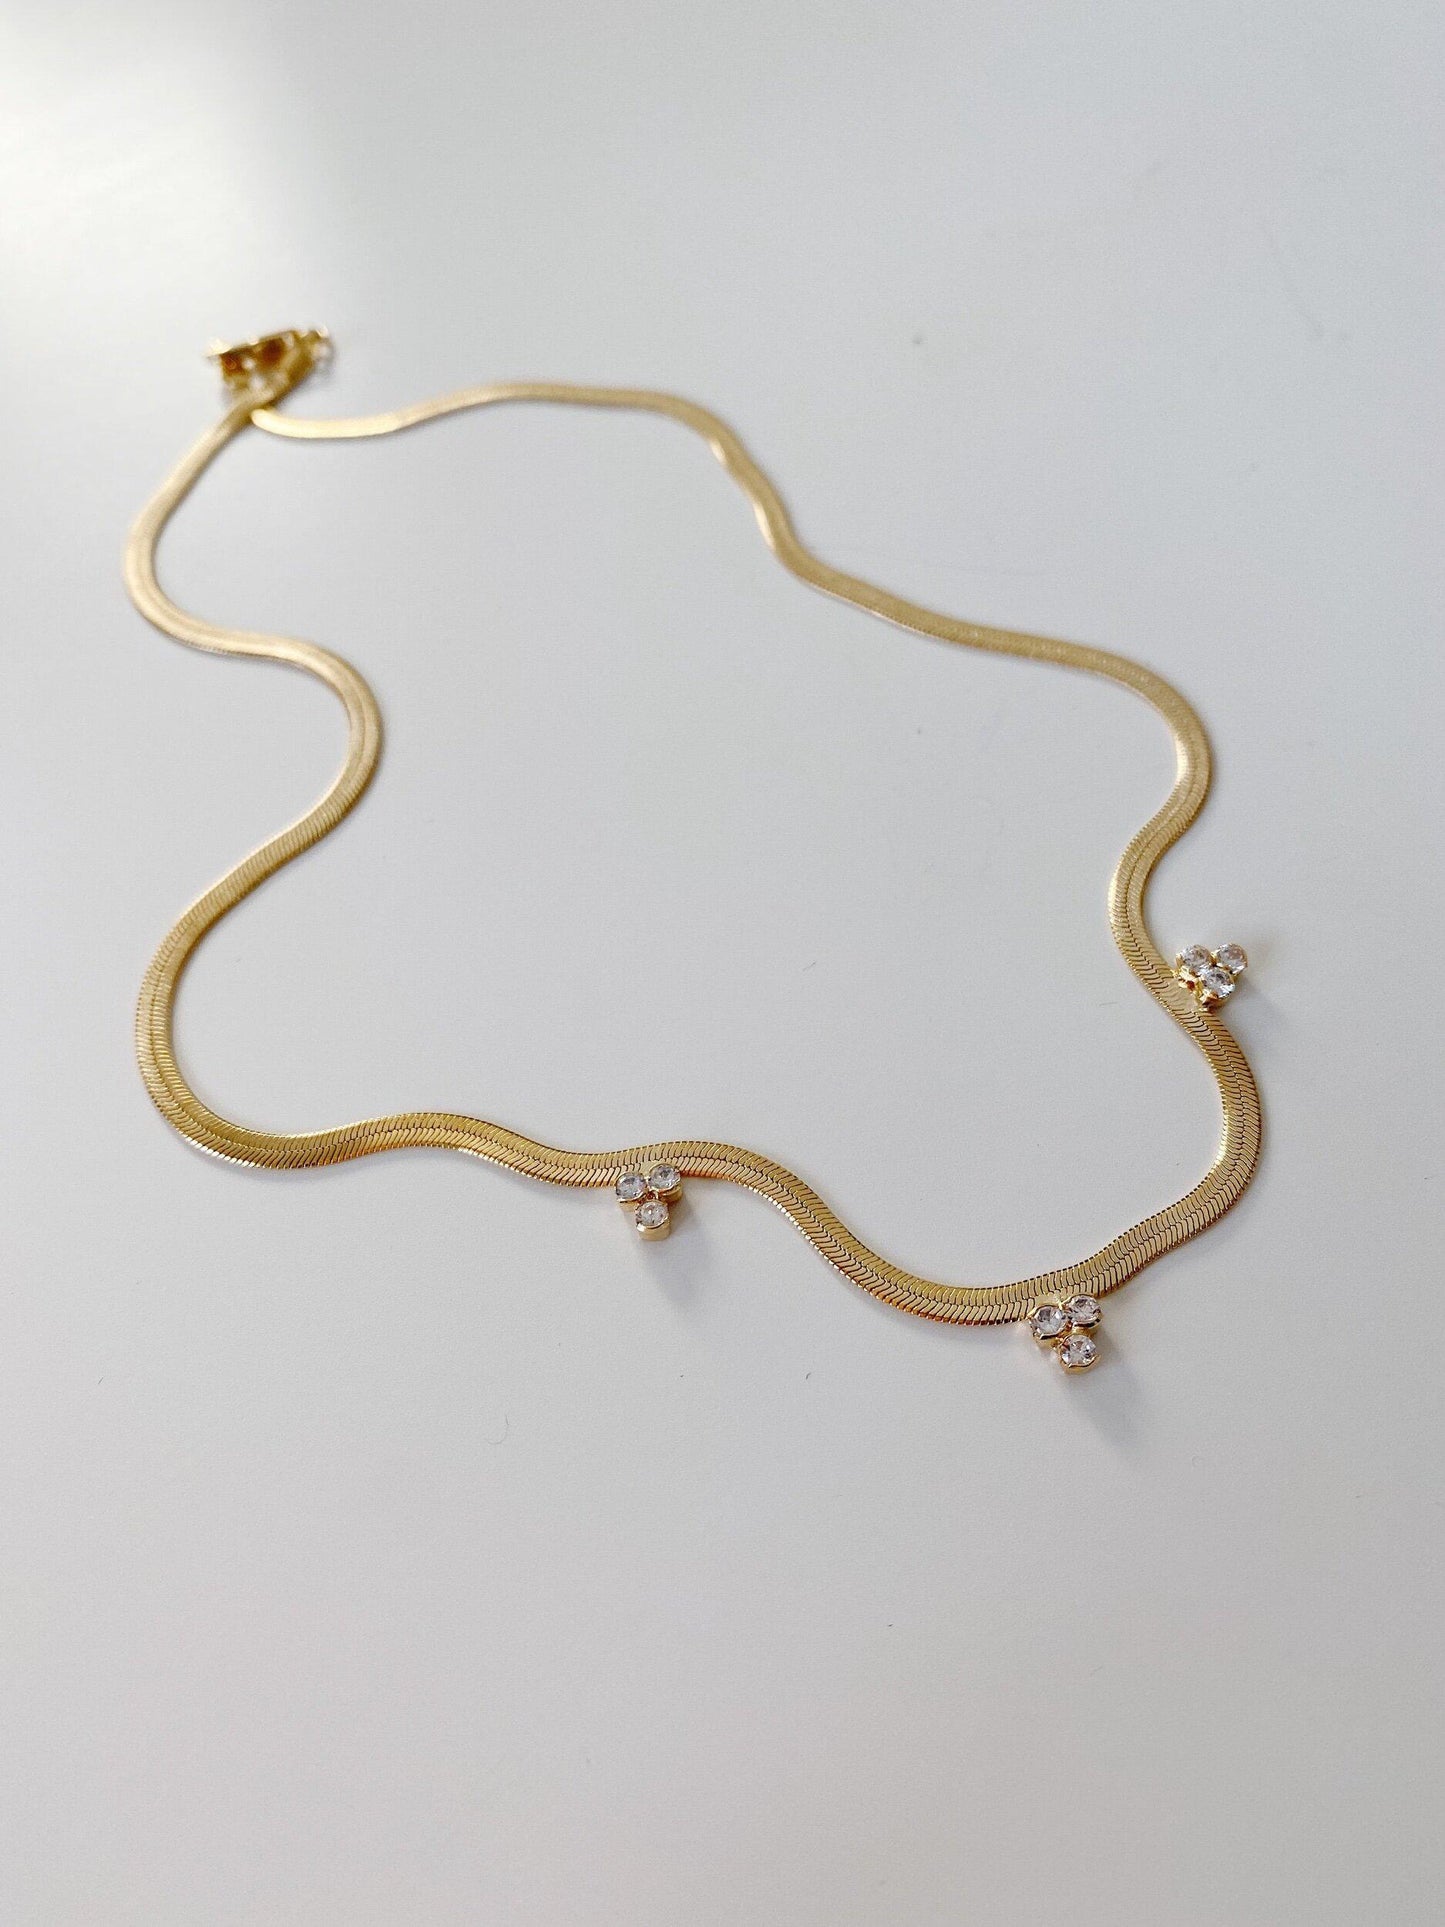 3mm Cubic Charm Herringbone Necklace